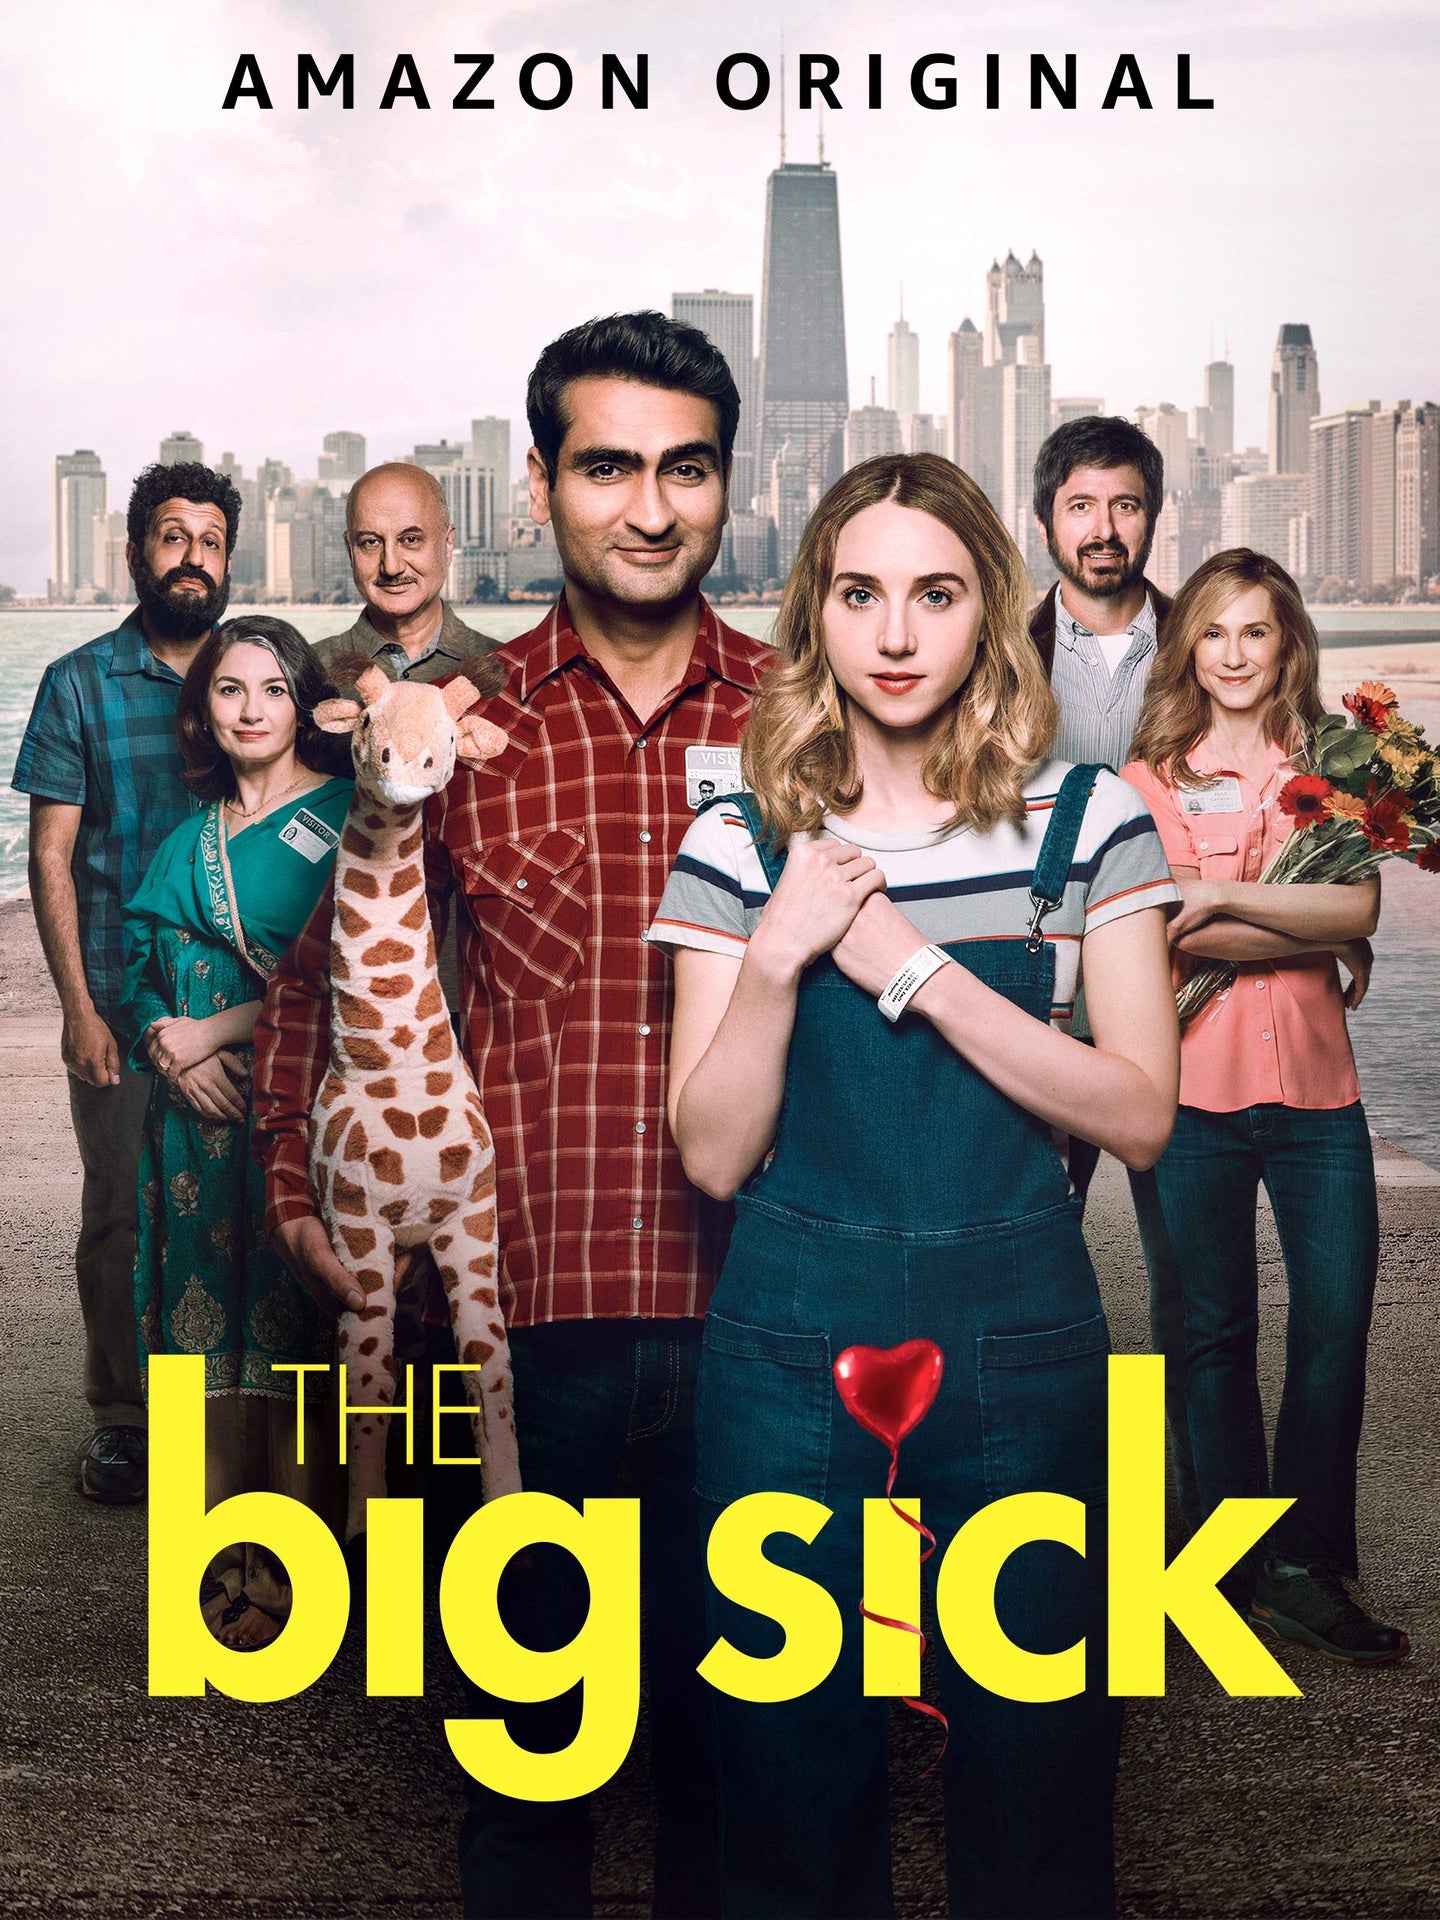 The Big Sick (2018) Vudu HD redemption only